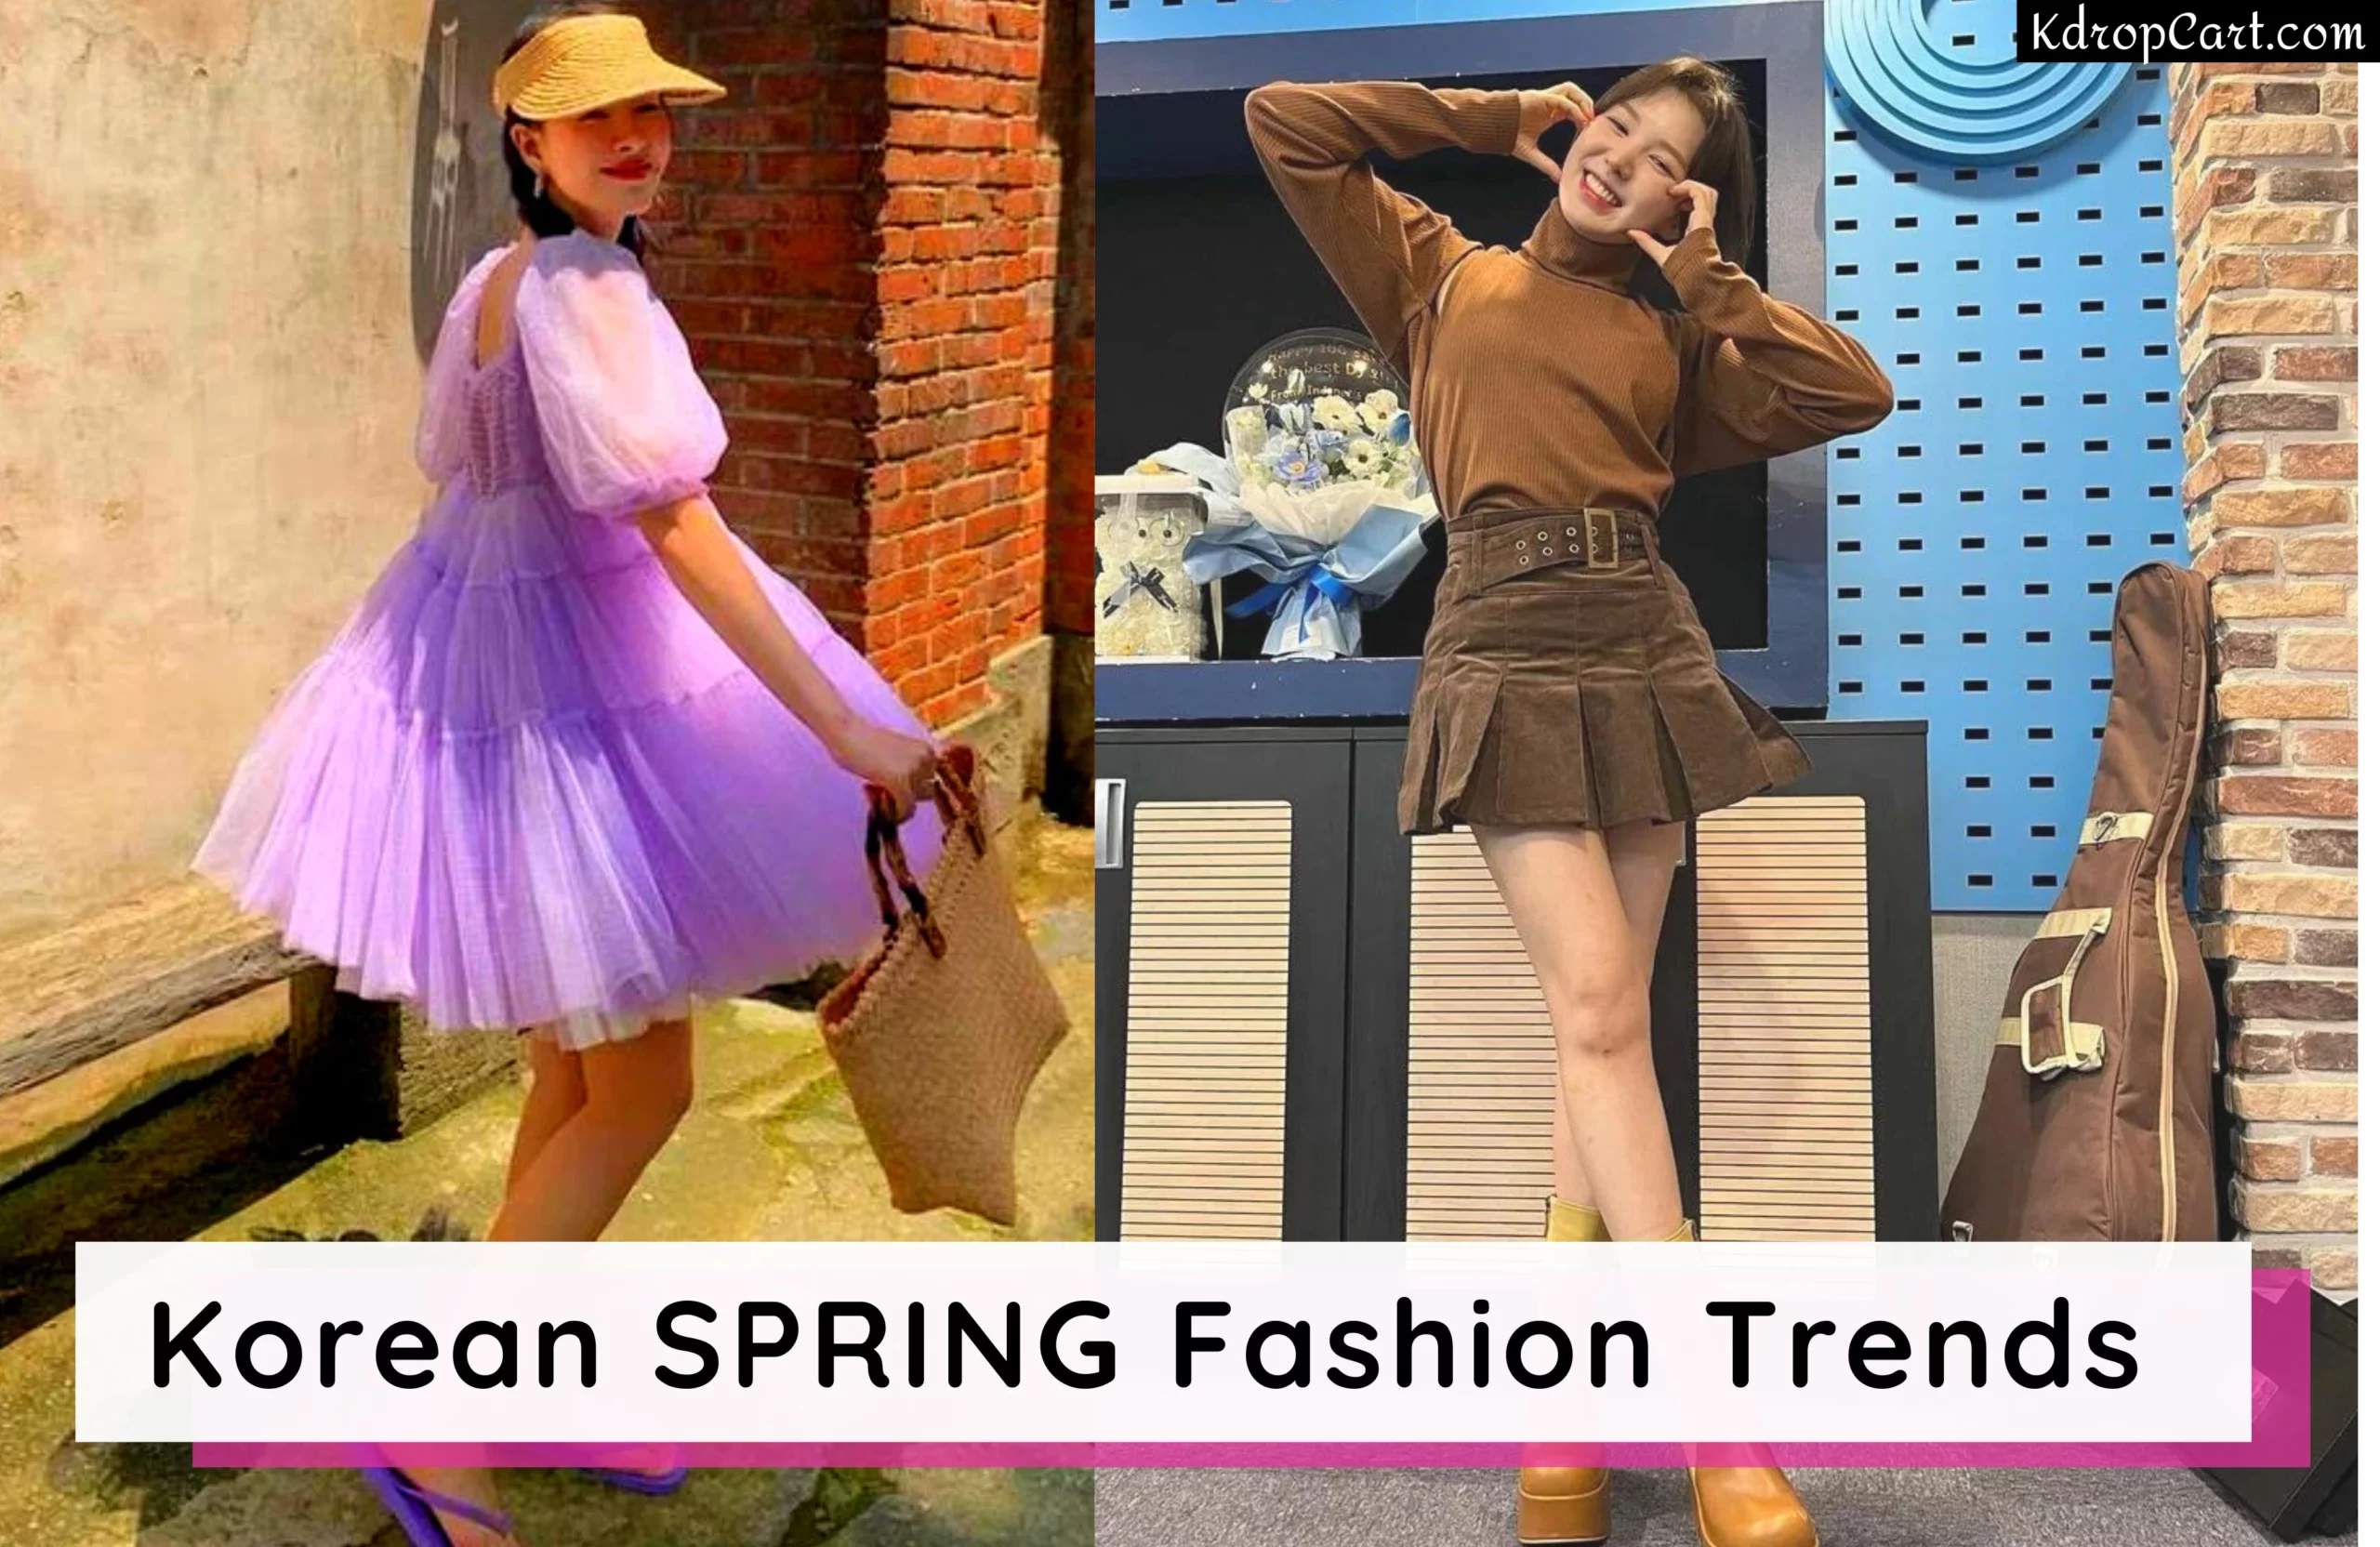 9 Korean Sprring Fashion Trends Of 2023 Trending Korean Spring Outfit Ideas For Men And Women